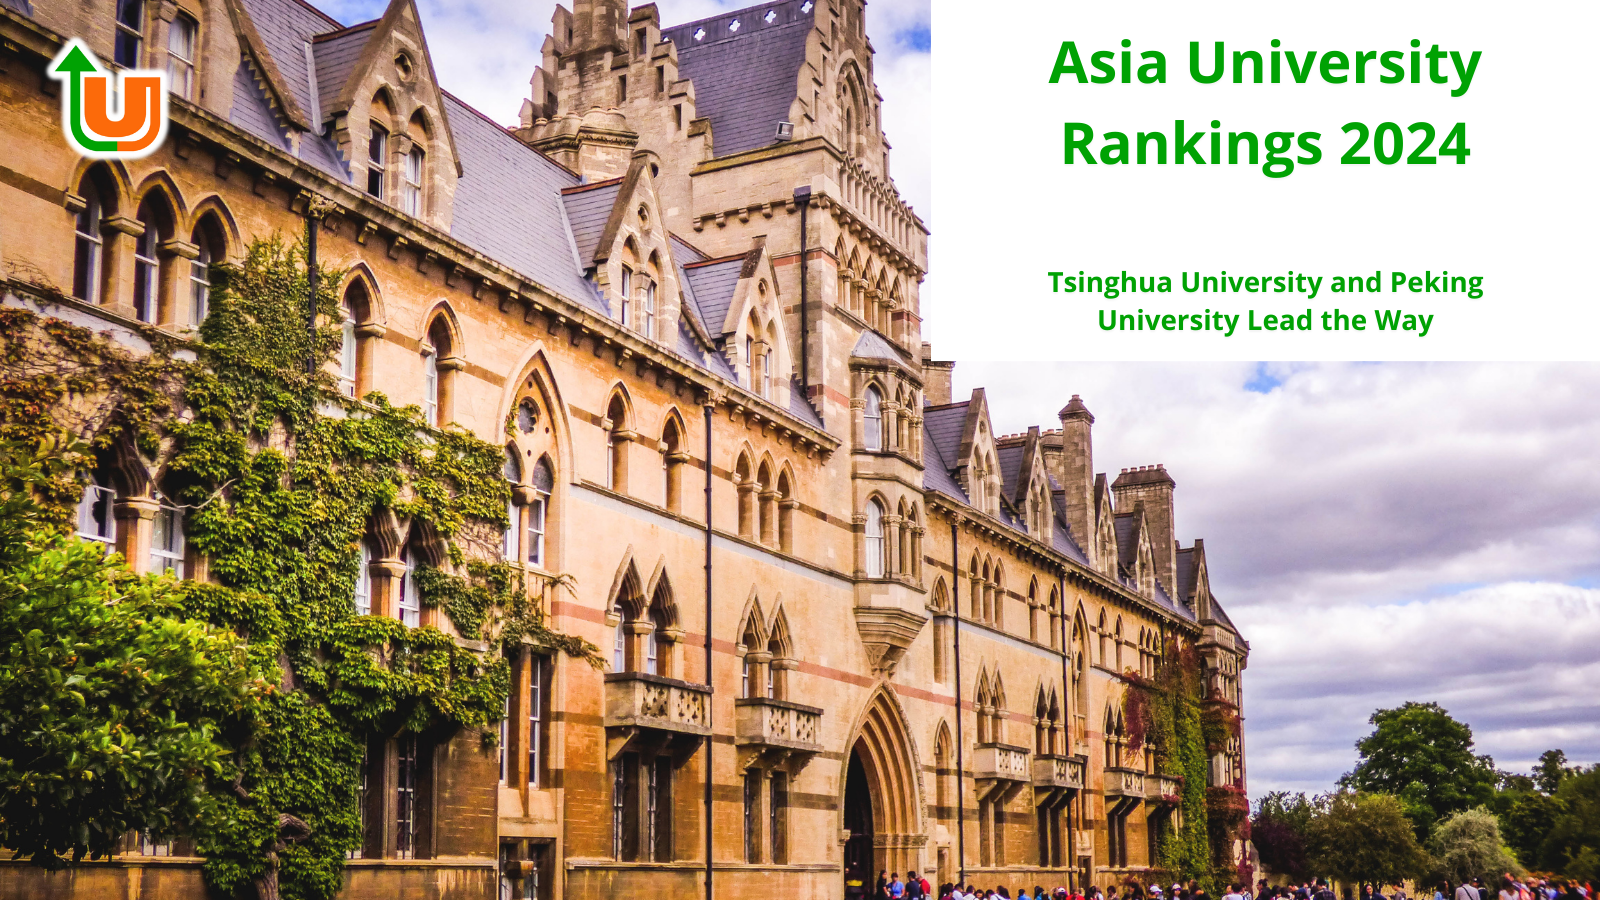 Asia University Rankings 2024 Tsinghua University and Peking University Lead the Way